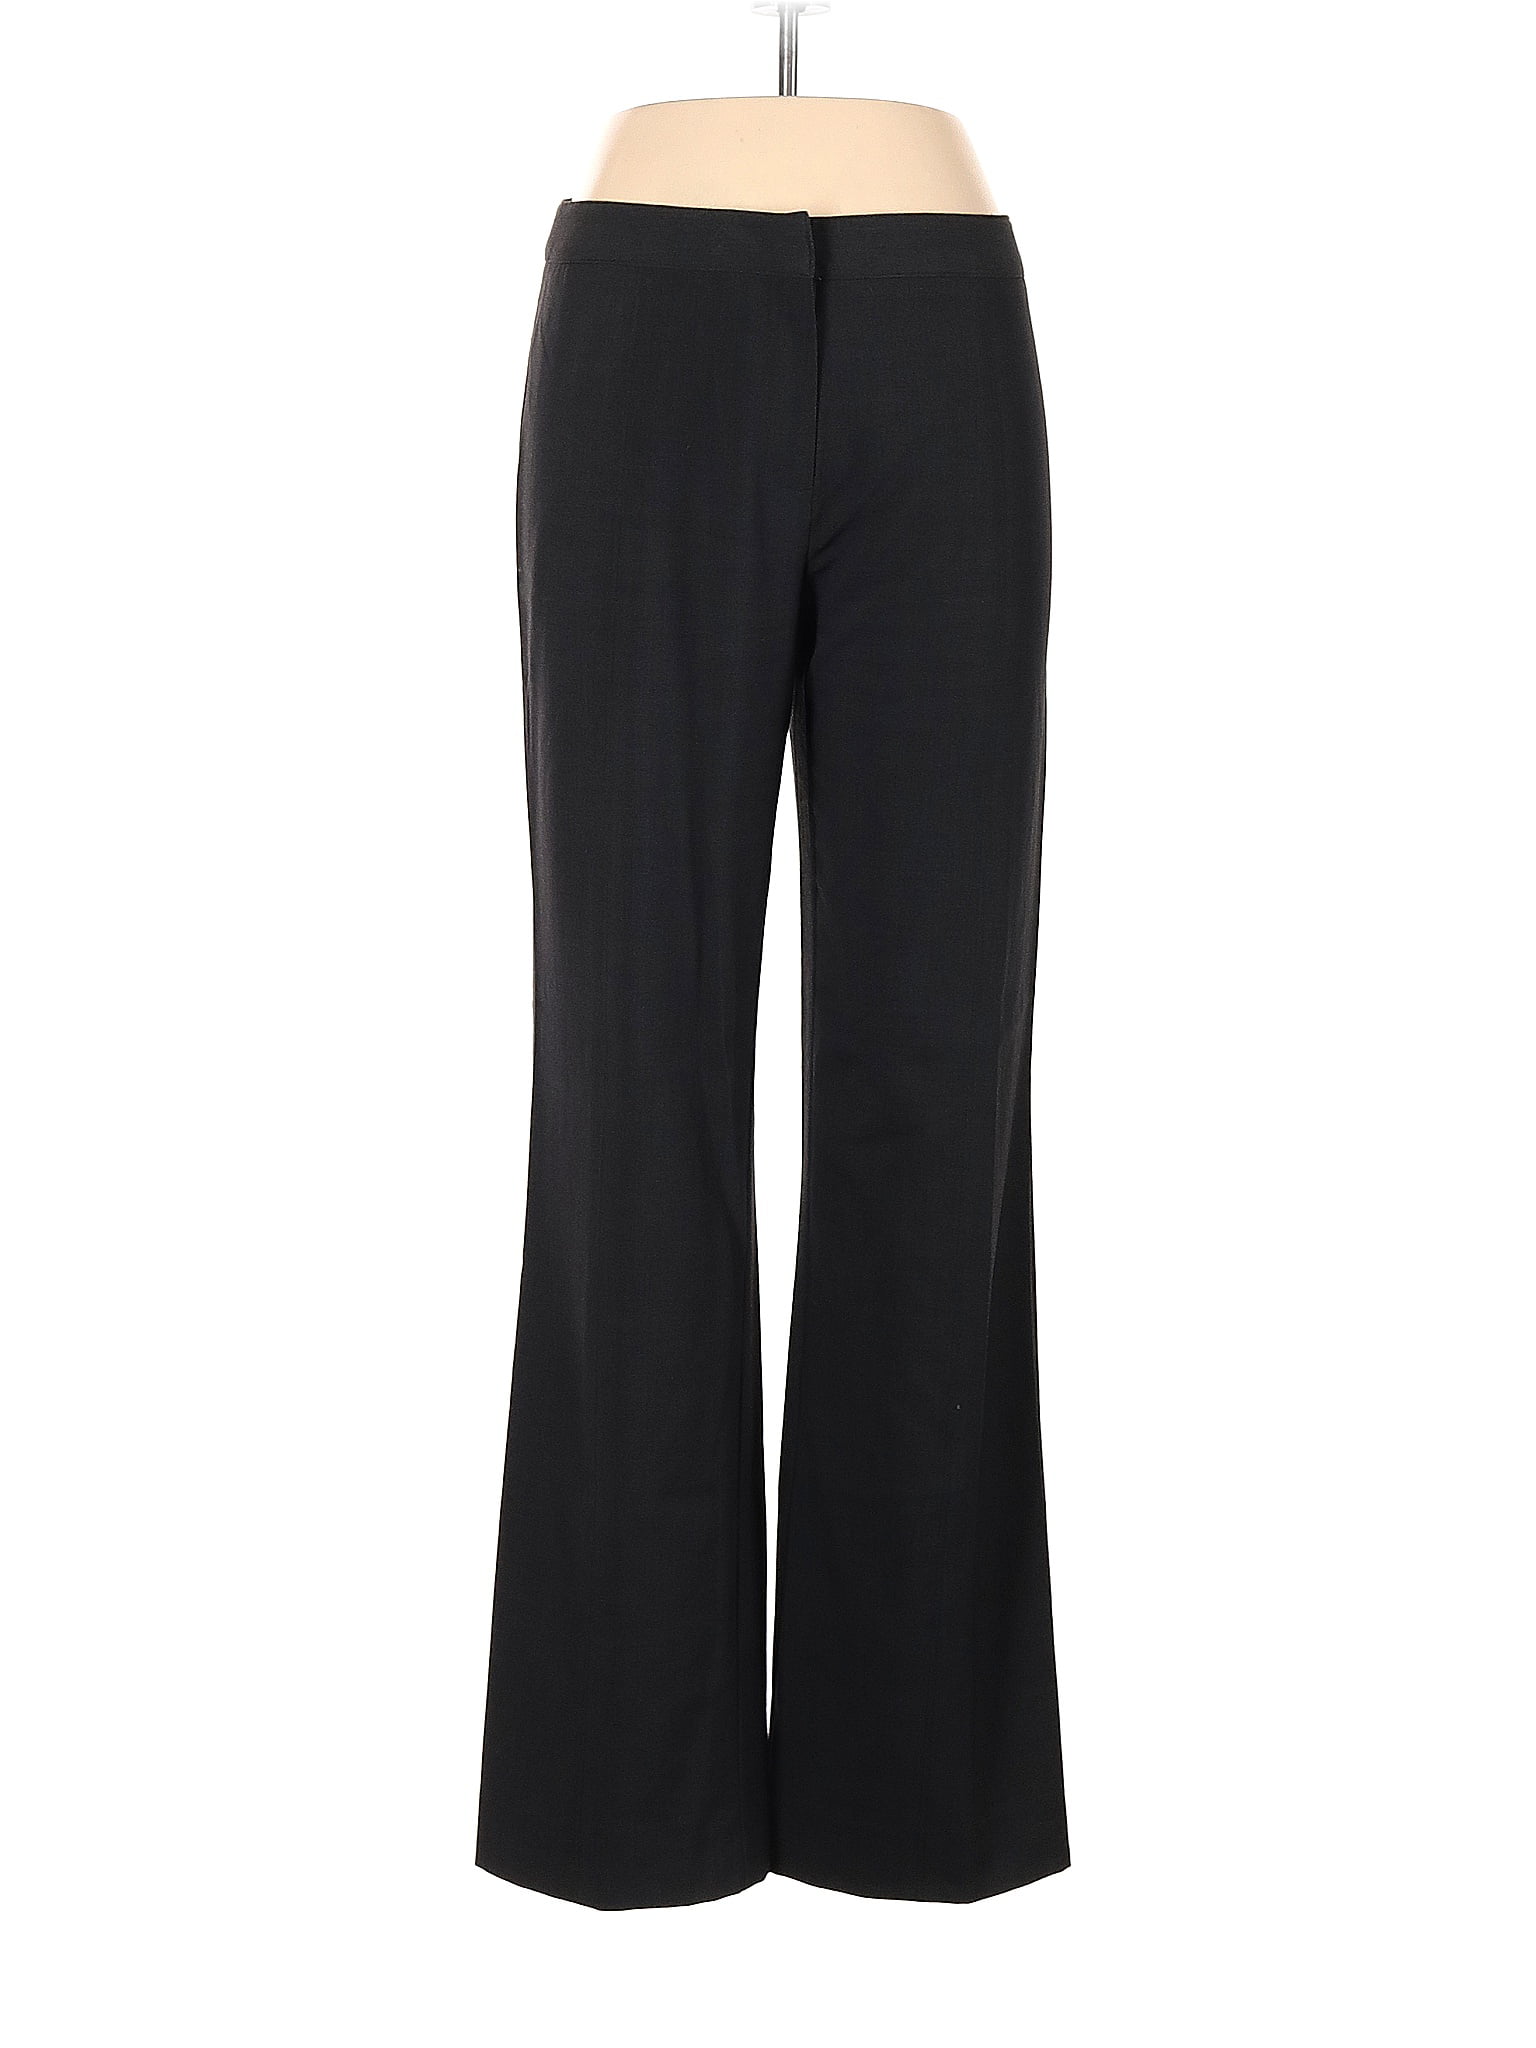 Ellen Tracy Solid Black Dress Pants